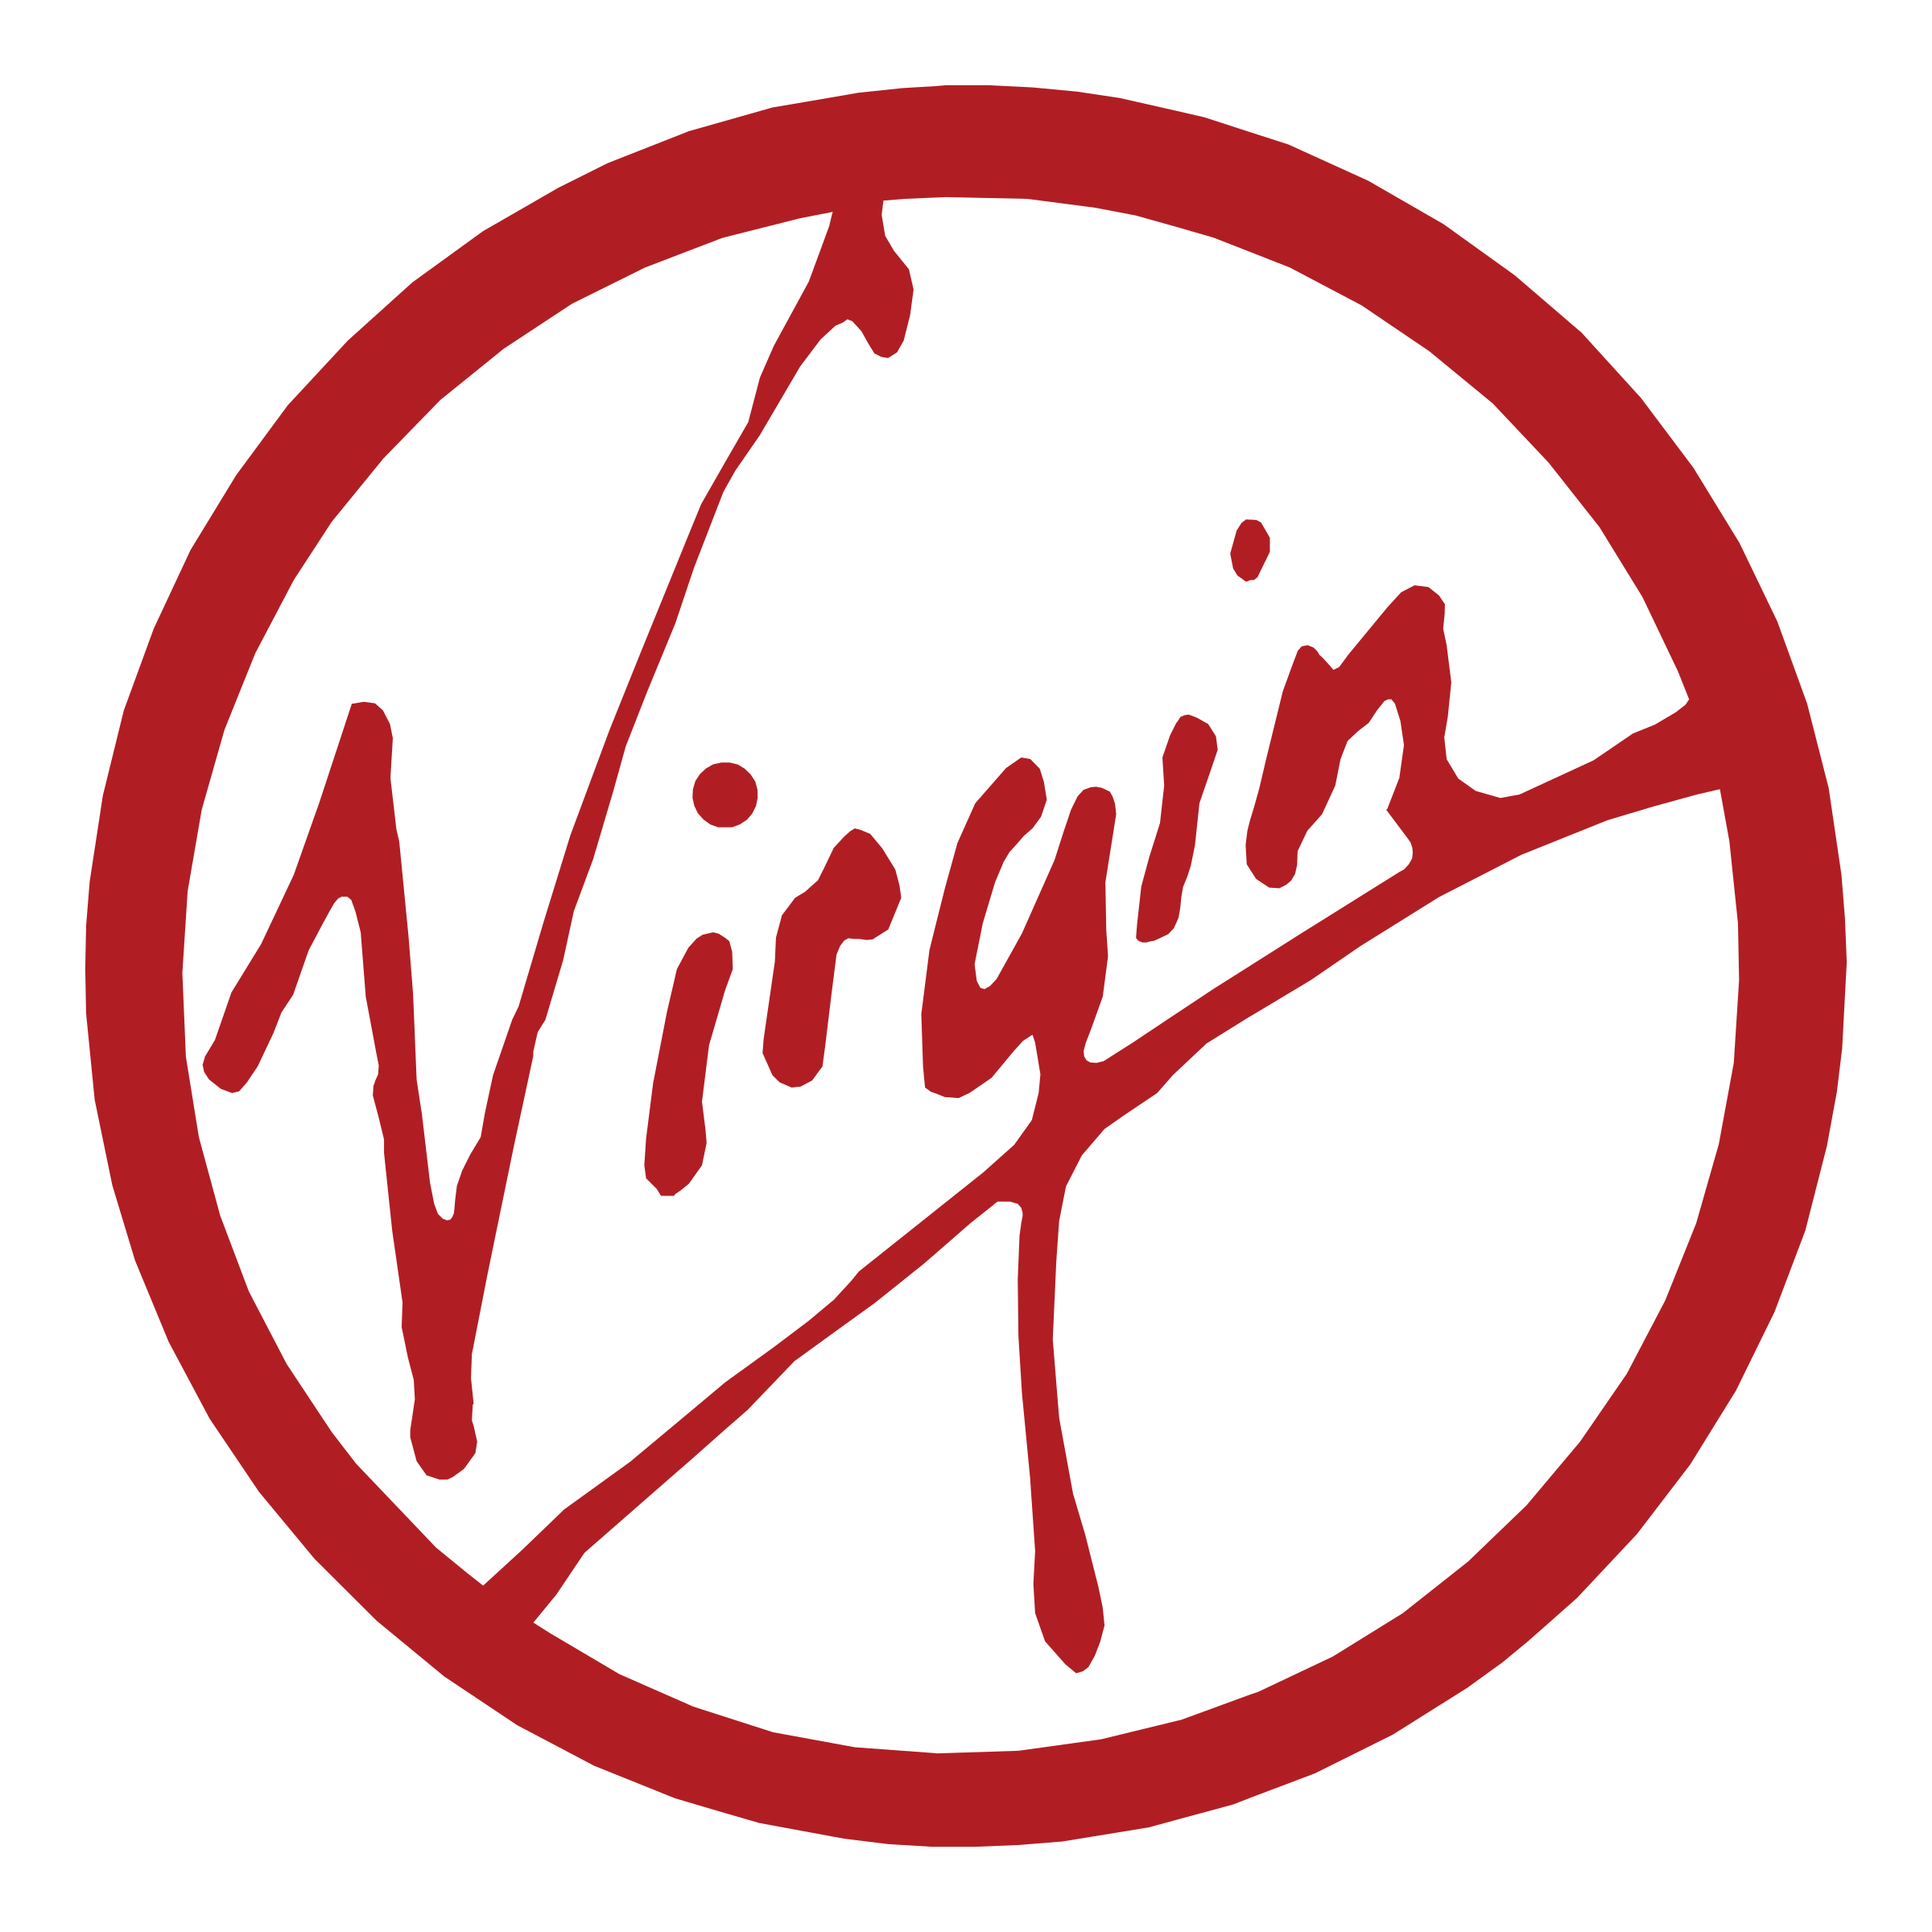 Virgin Logo - Virgin Logo PNG Transparent & SVG Vector - Freebie Supply